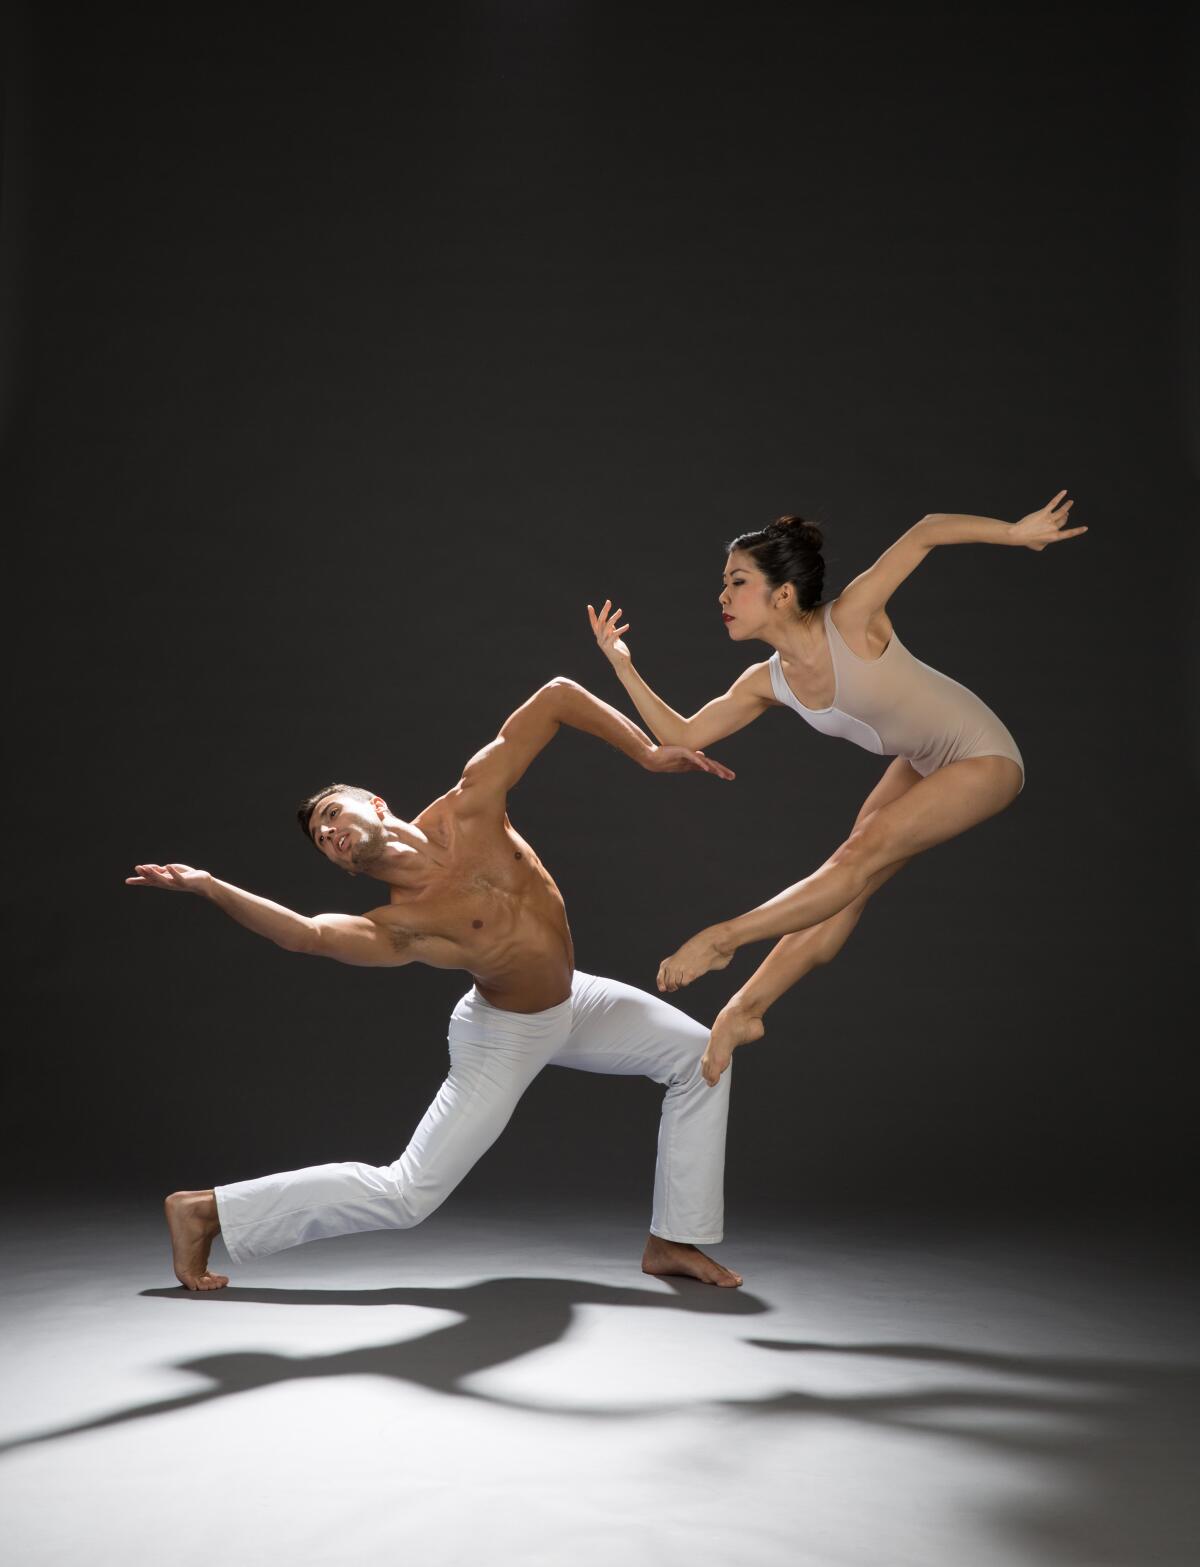 BalletX dancers Andrea Yorita and Richard Villaverde.